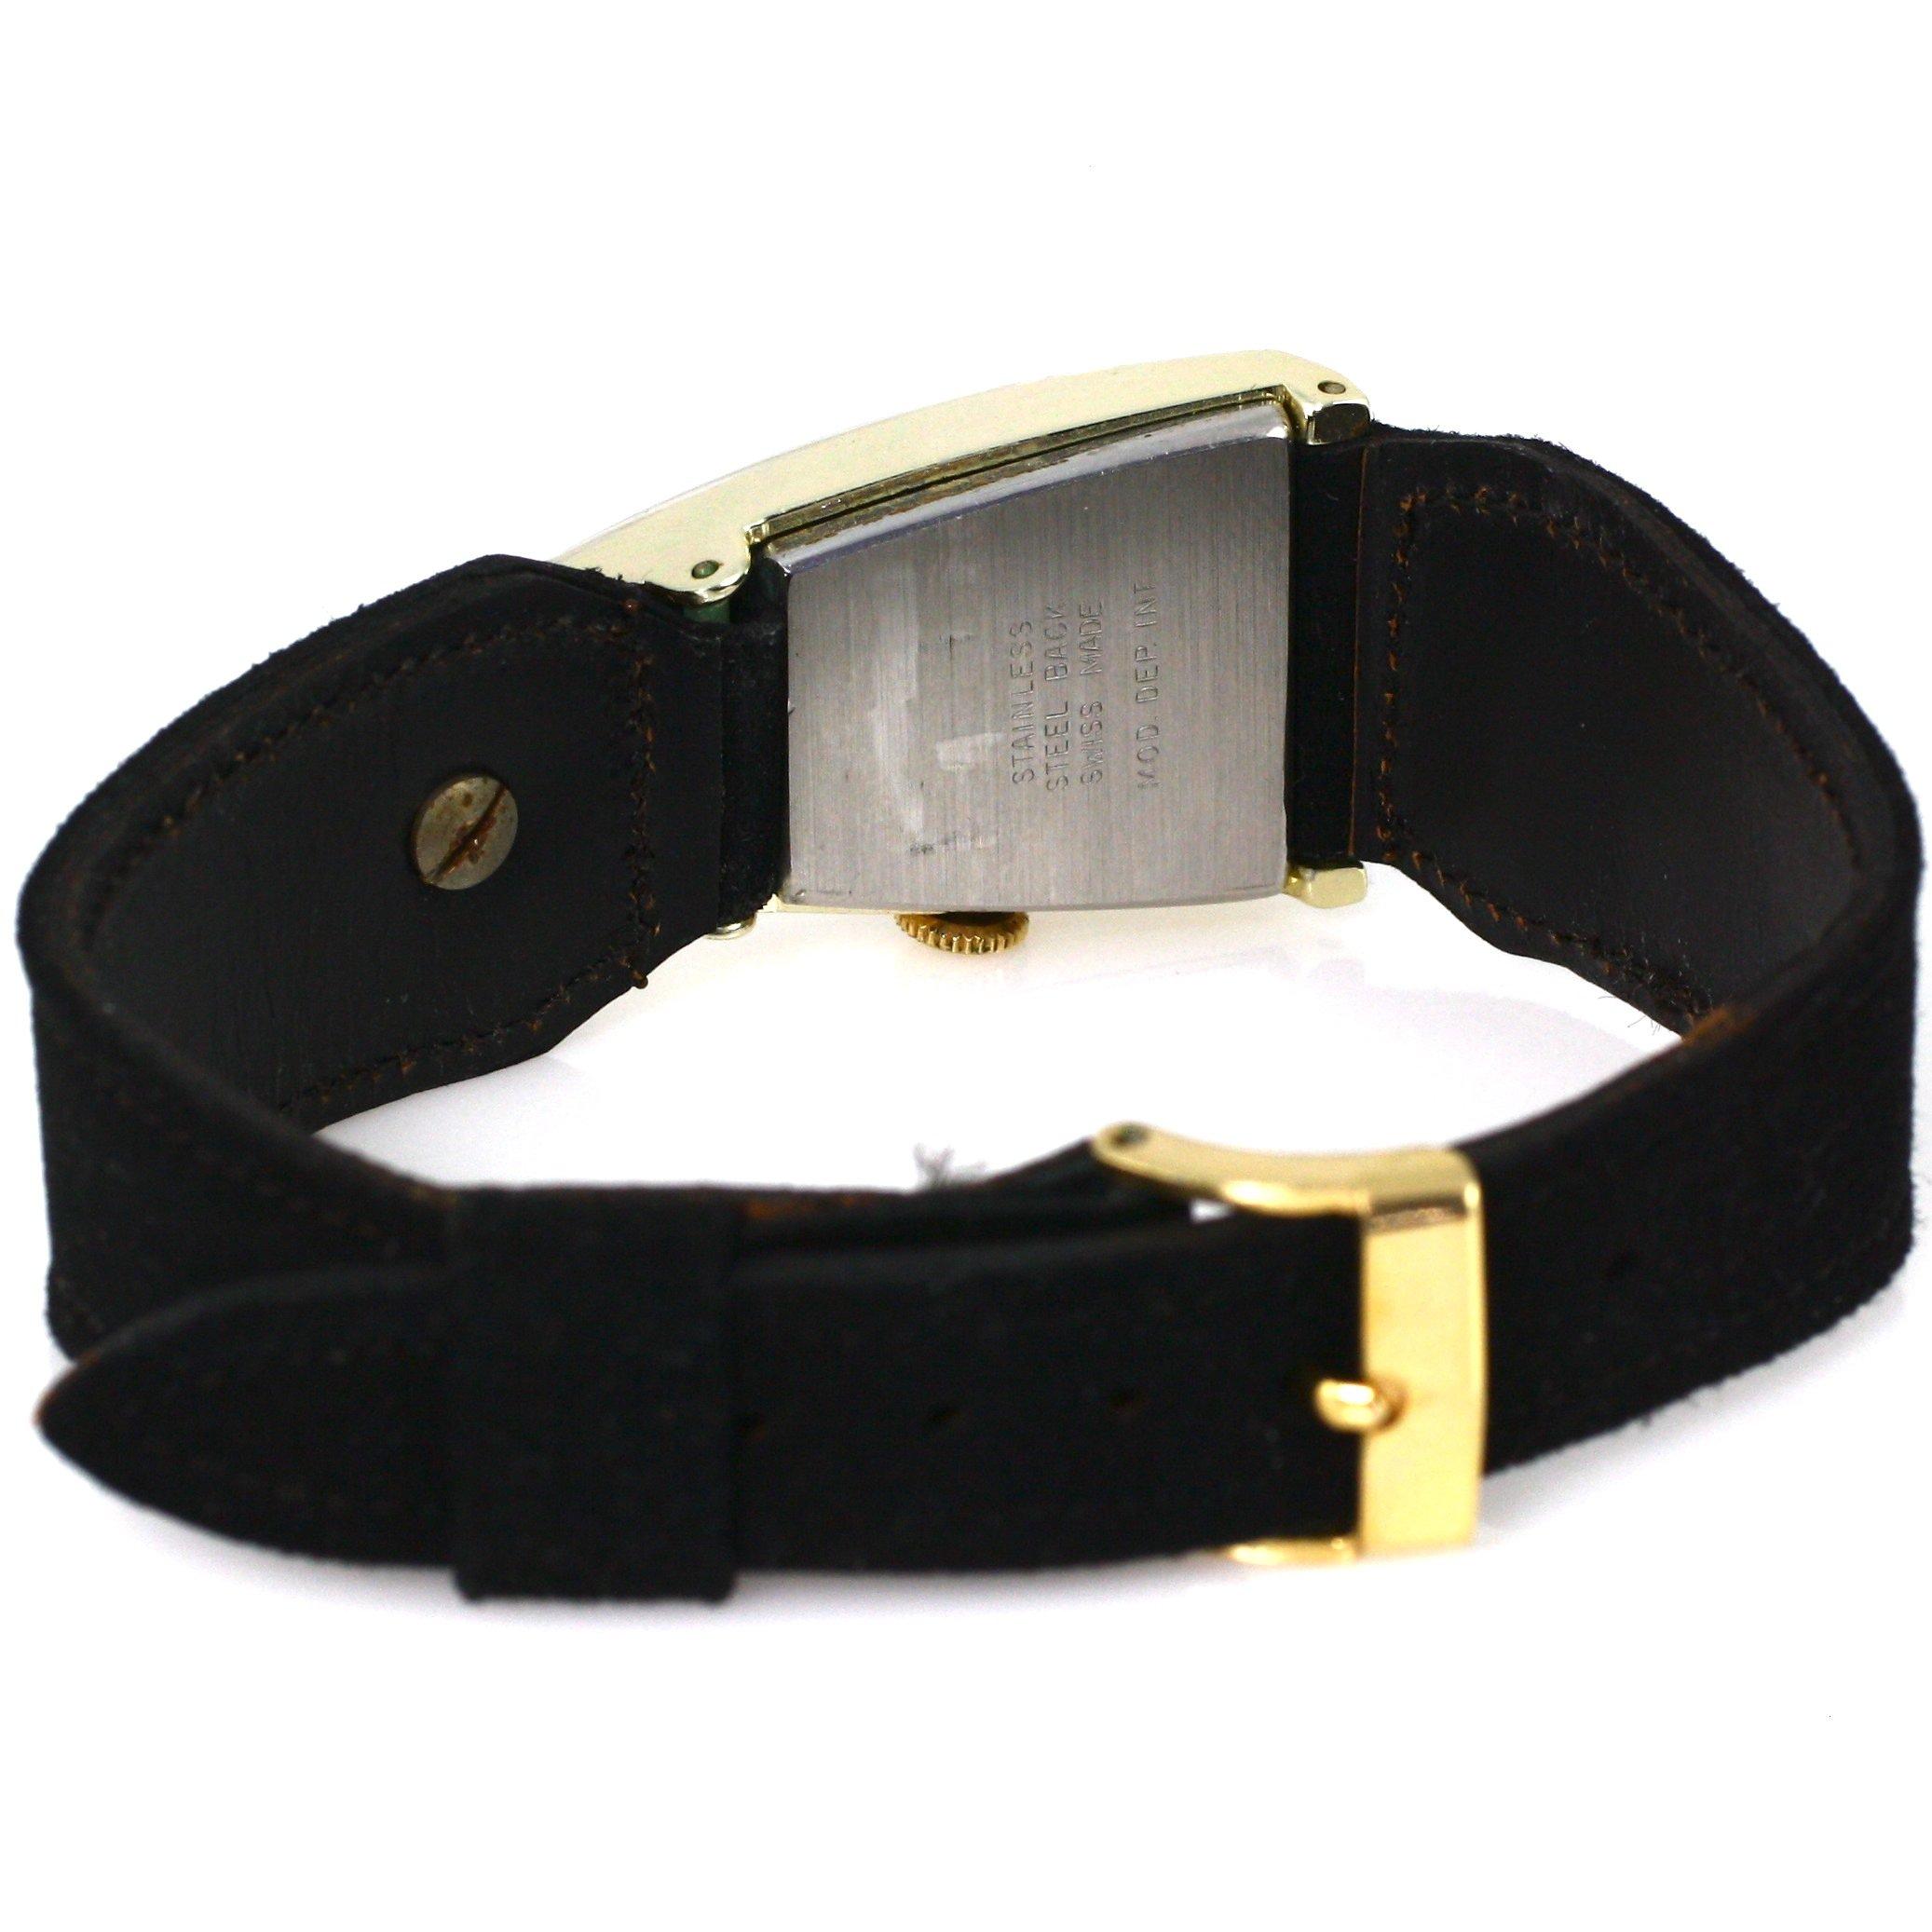 Authentic vintage Louvic 17-jewels Hilton “Rocket” triangle gold-plated wristwatch